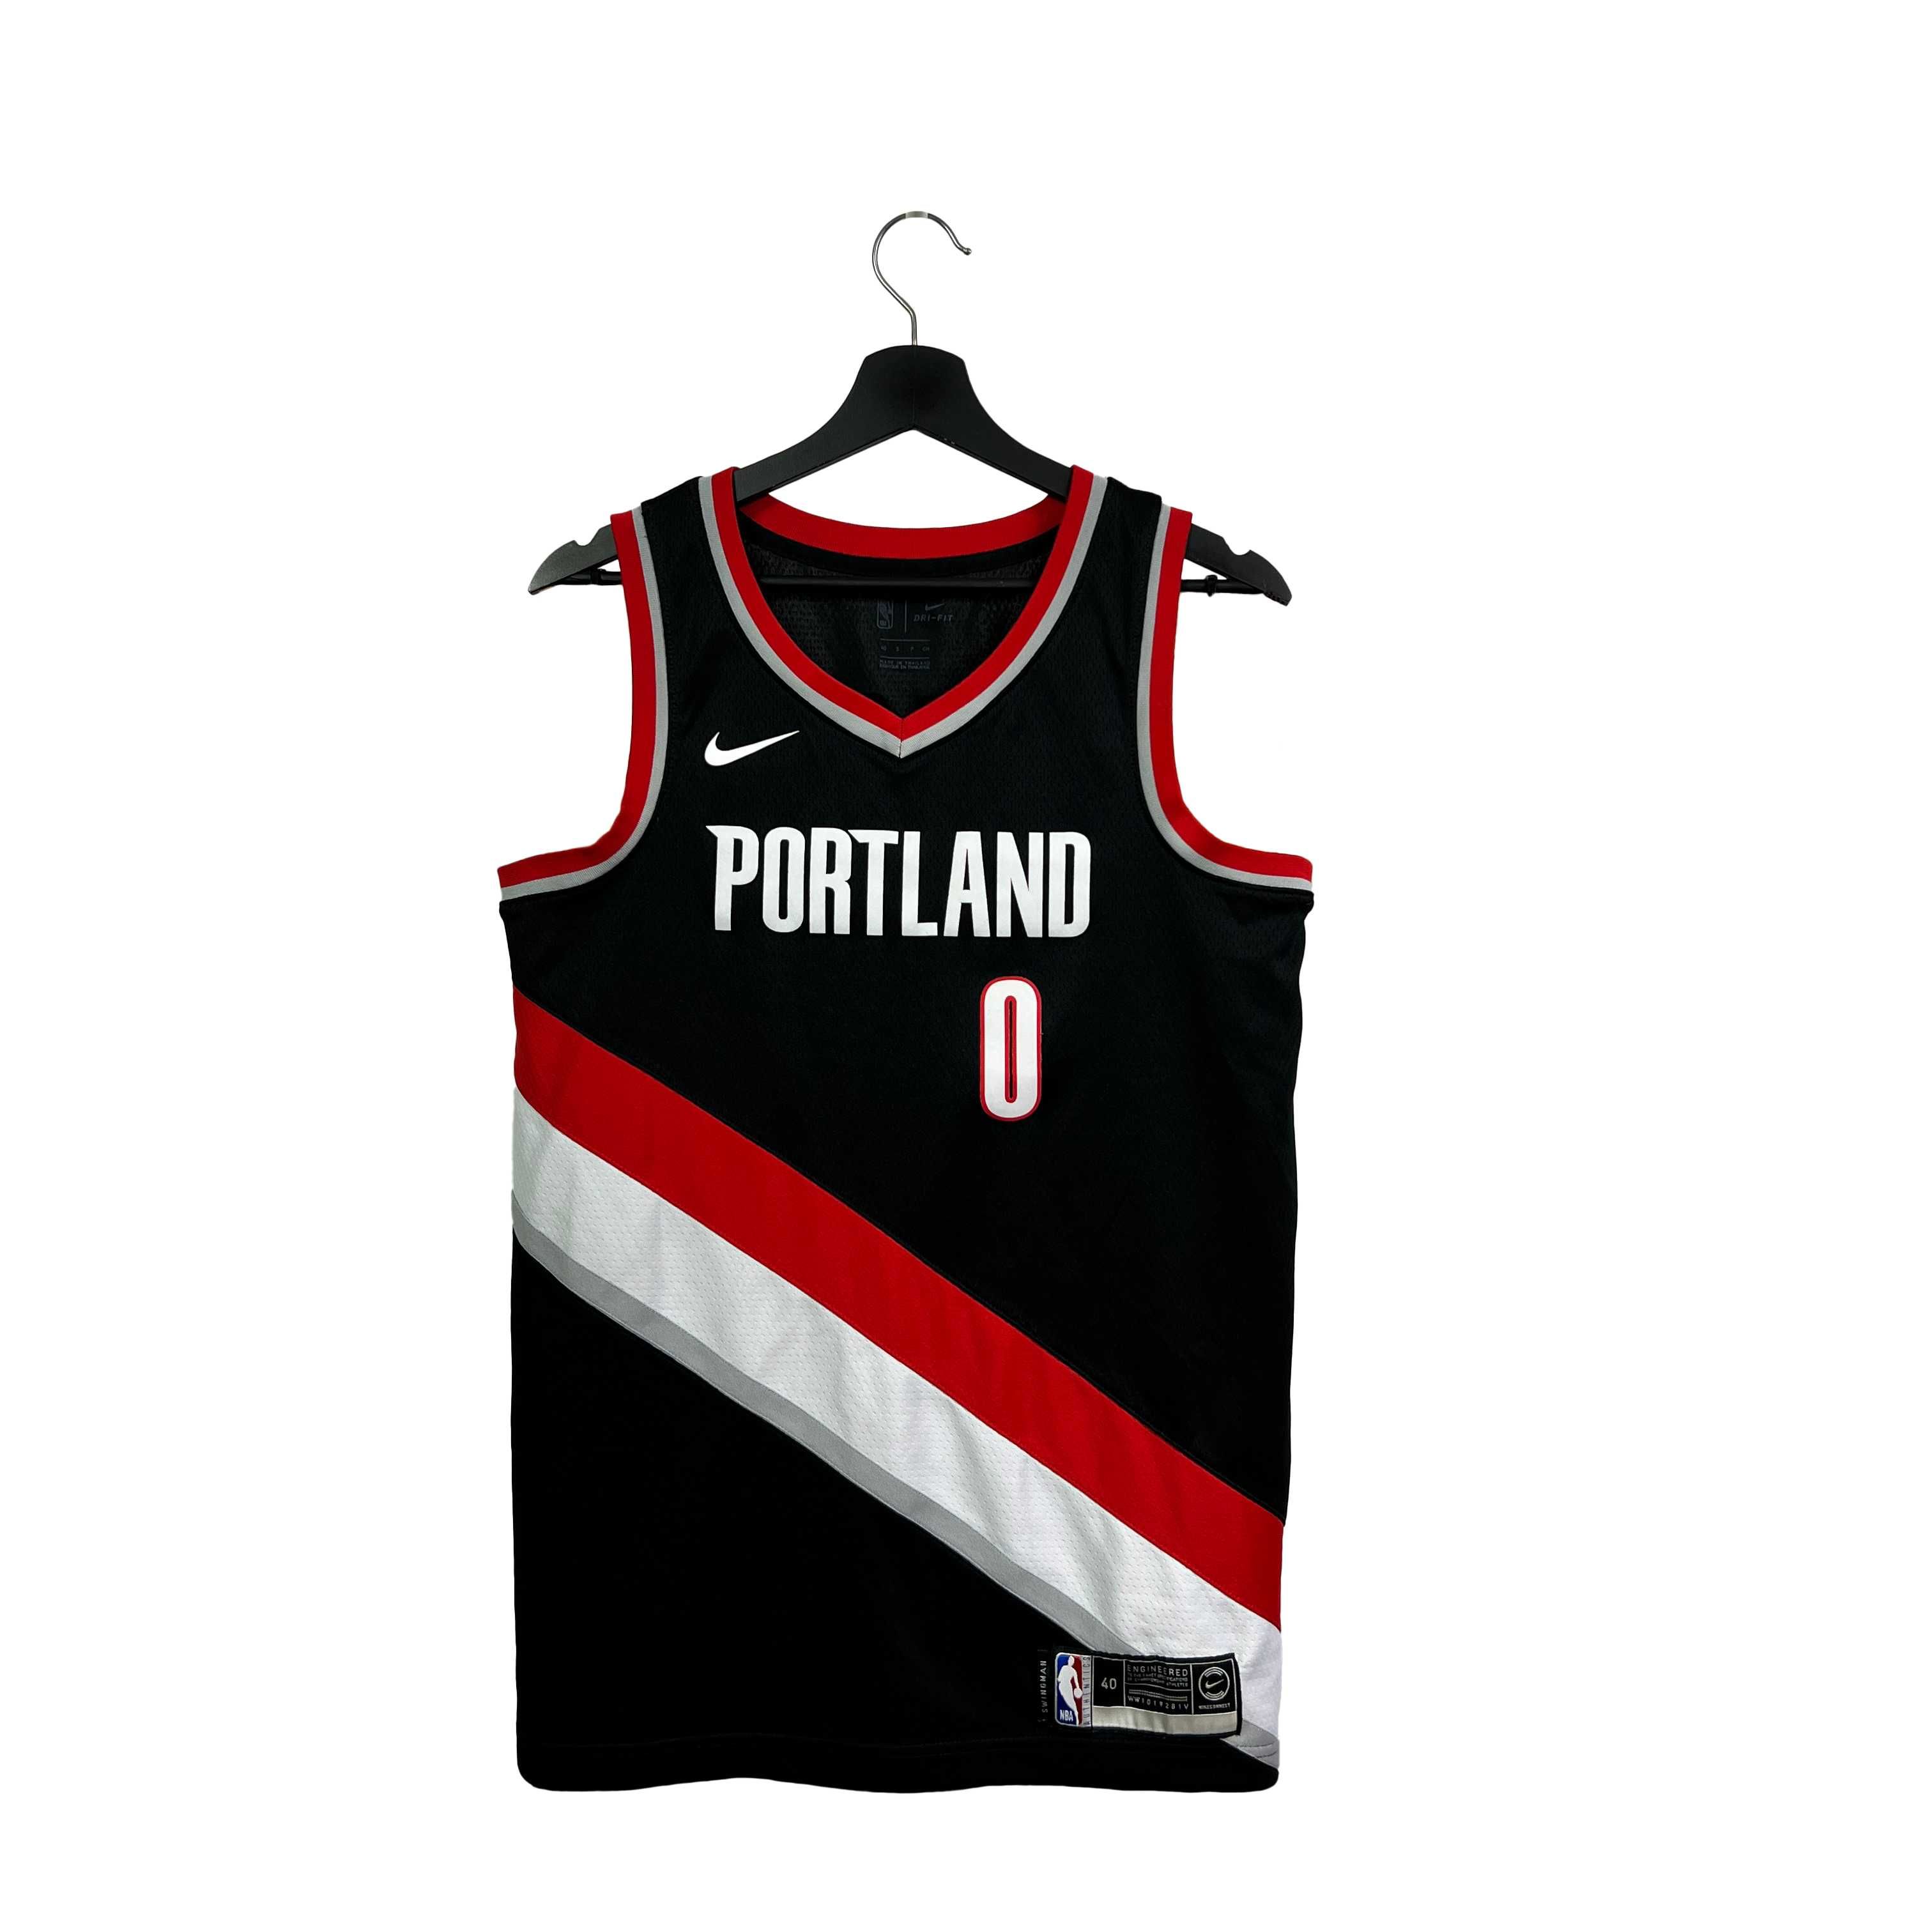 Koszulka na ramiączkach Nike x NBA x Portland